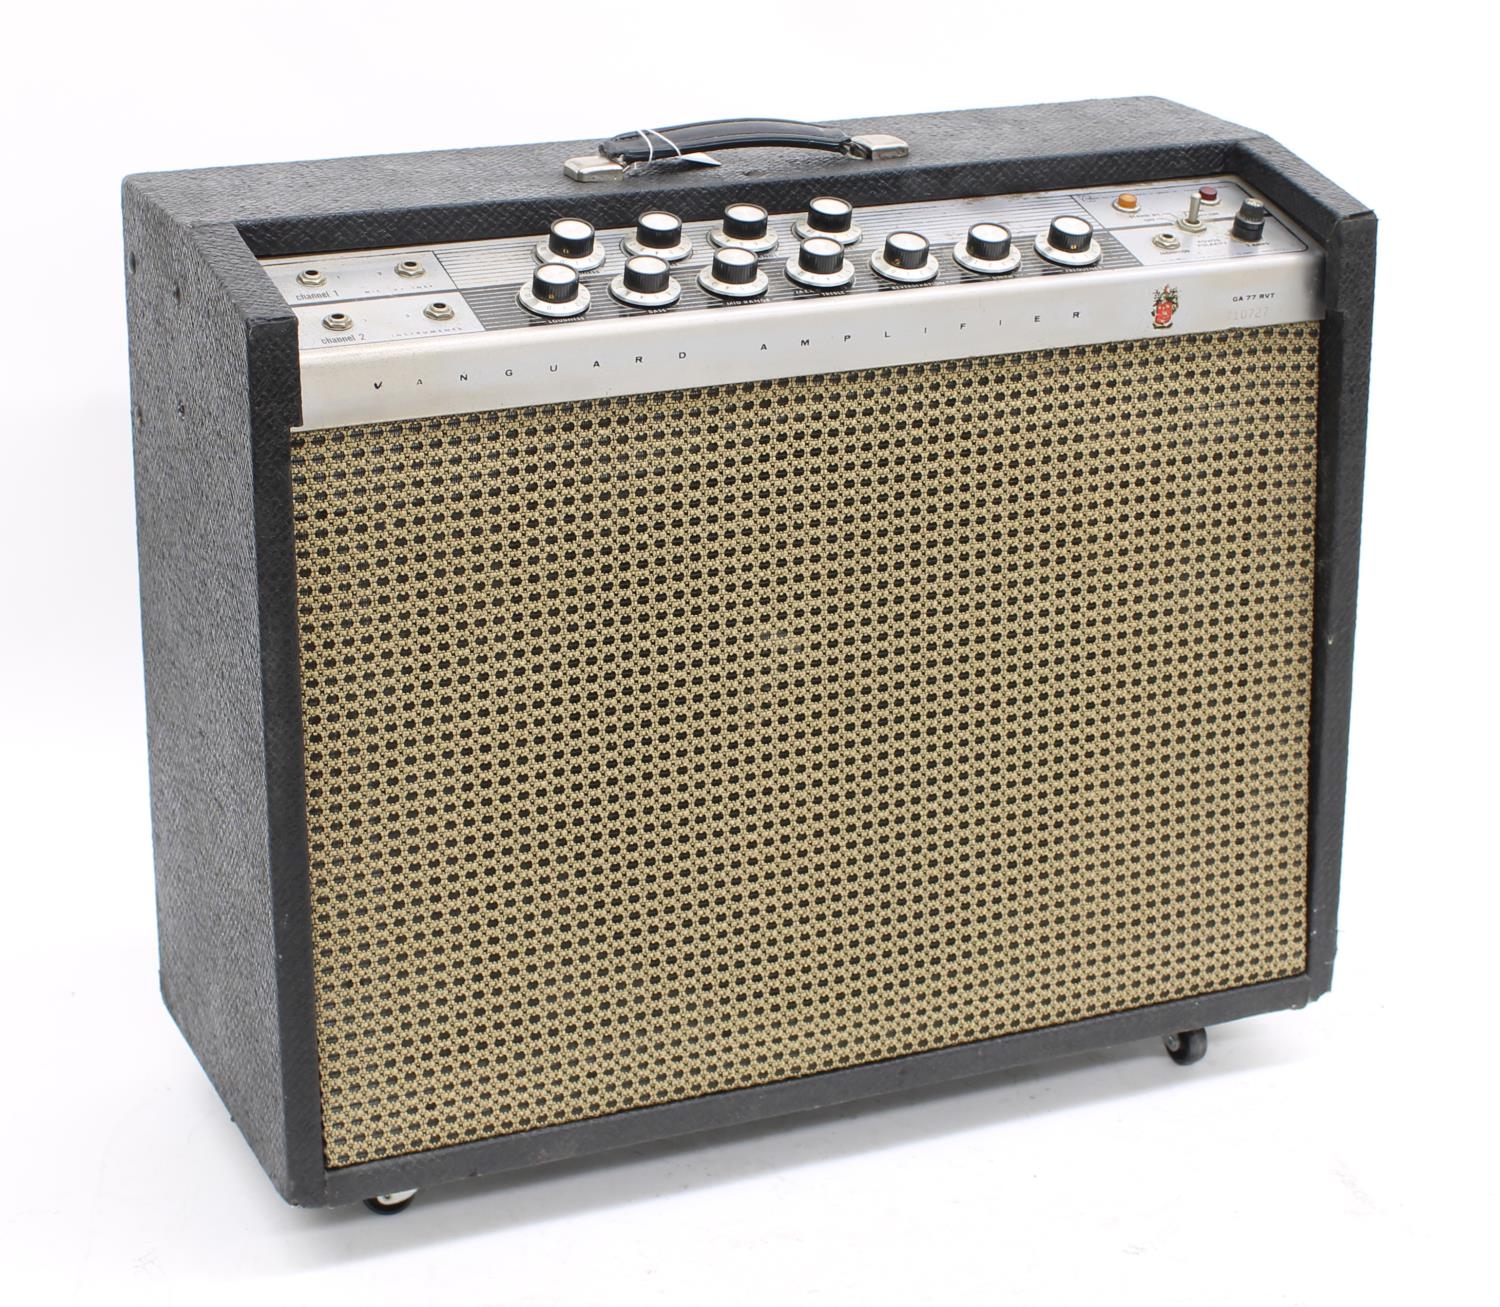 1960s Gibson Vanguard GA77 RVT guitar amplifier, made in USA, ser. no. 710727 (USA voltage)